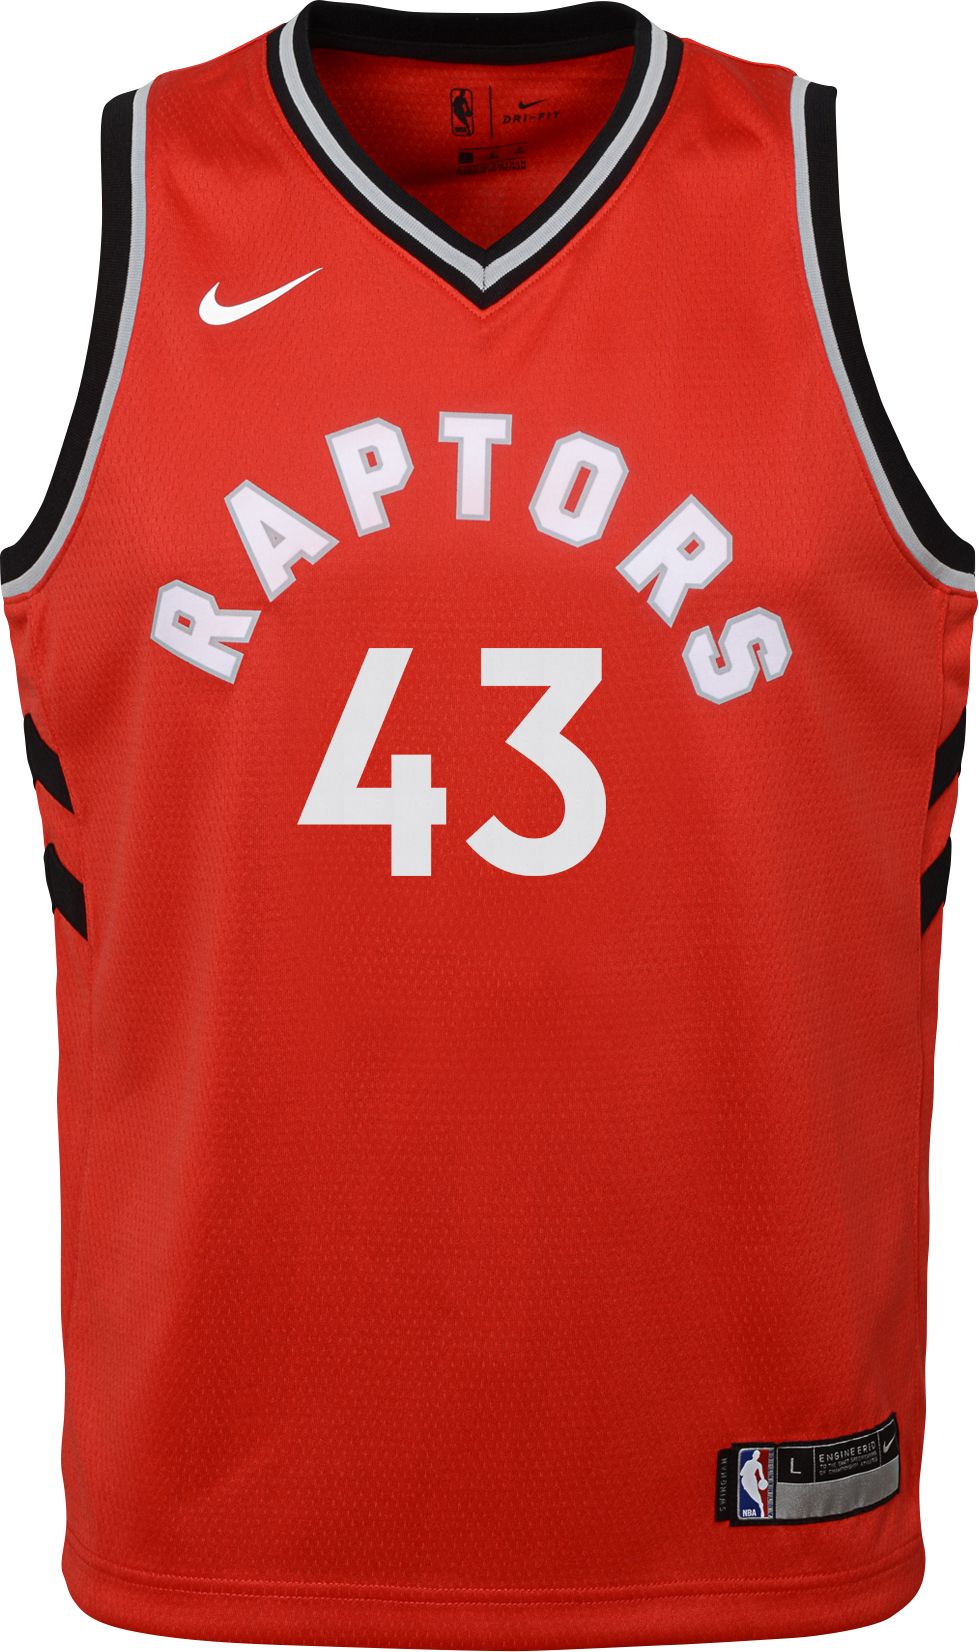 Men's Nike Toronto Raptors No43 Pascal Siakam Red Basketball Swingman Earned Edition Jersey